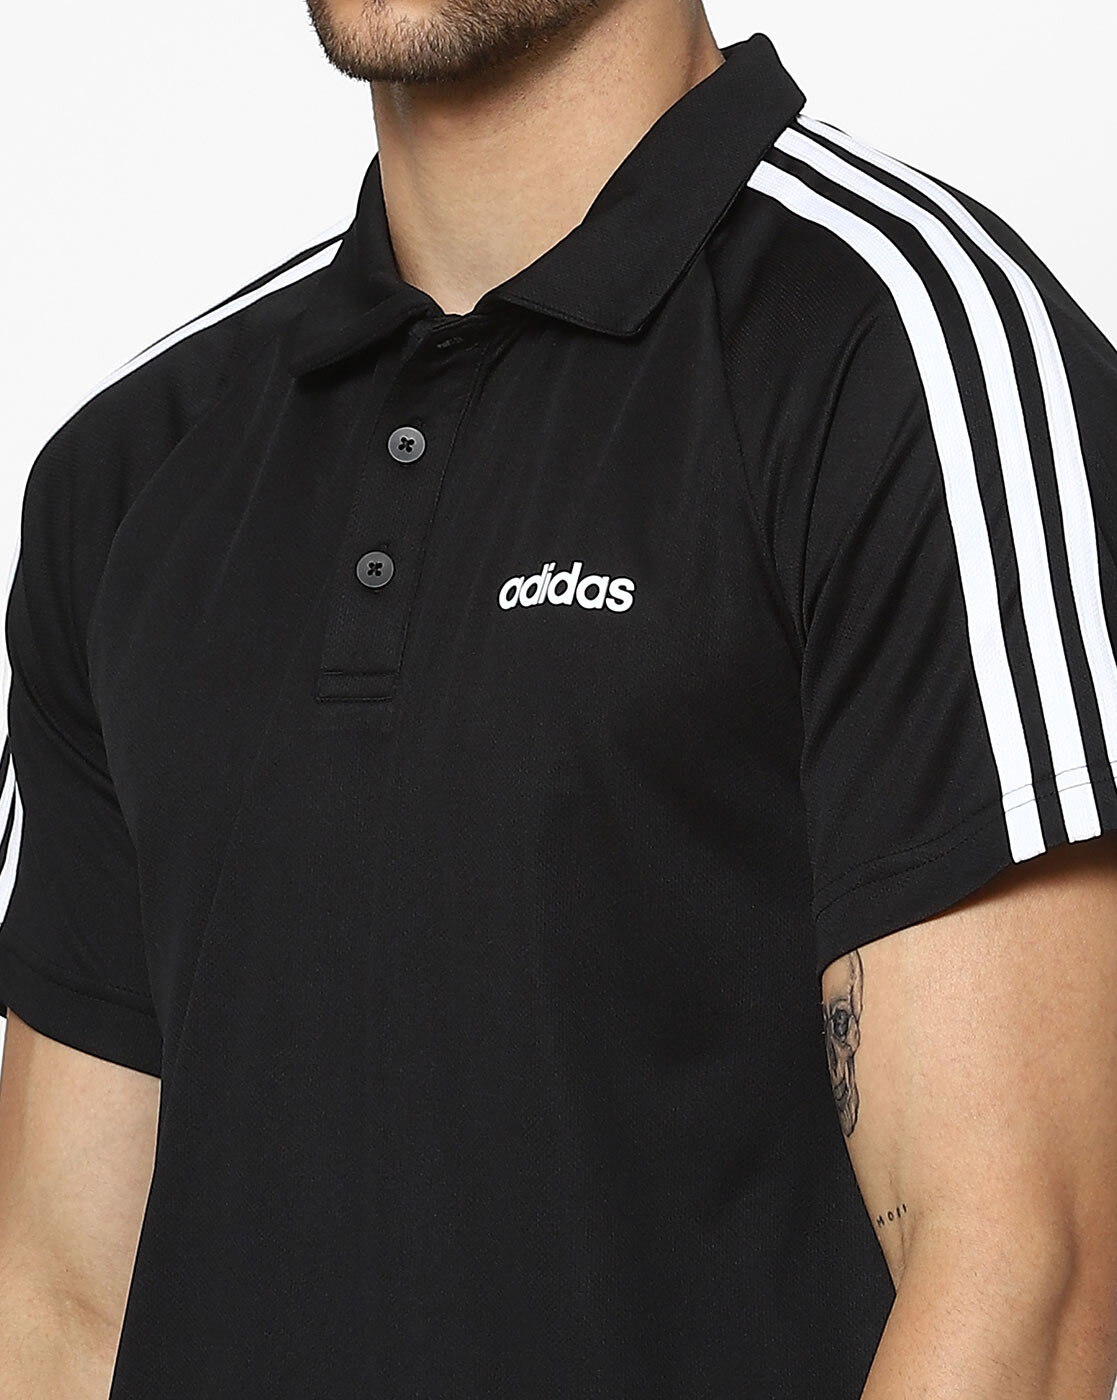 Outflow blackboard problem Buy Black Tshirts for Men by ADIDAS Online | Ajio.com